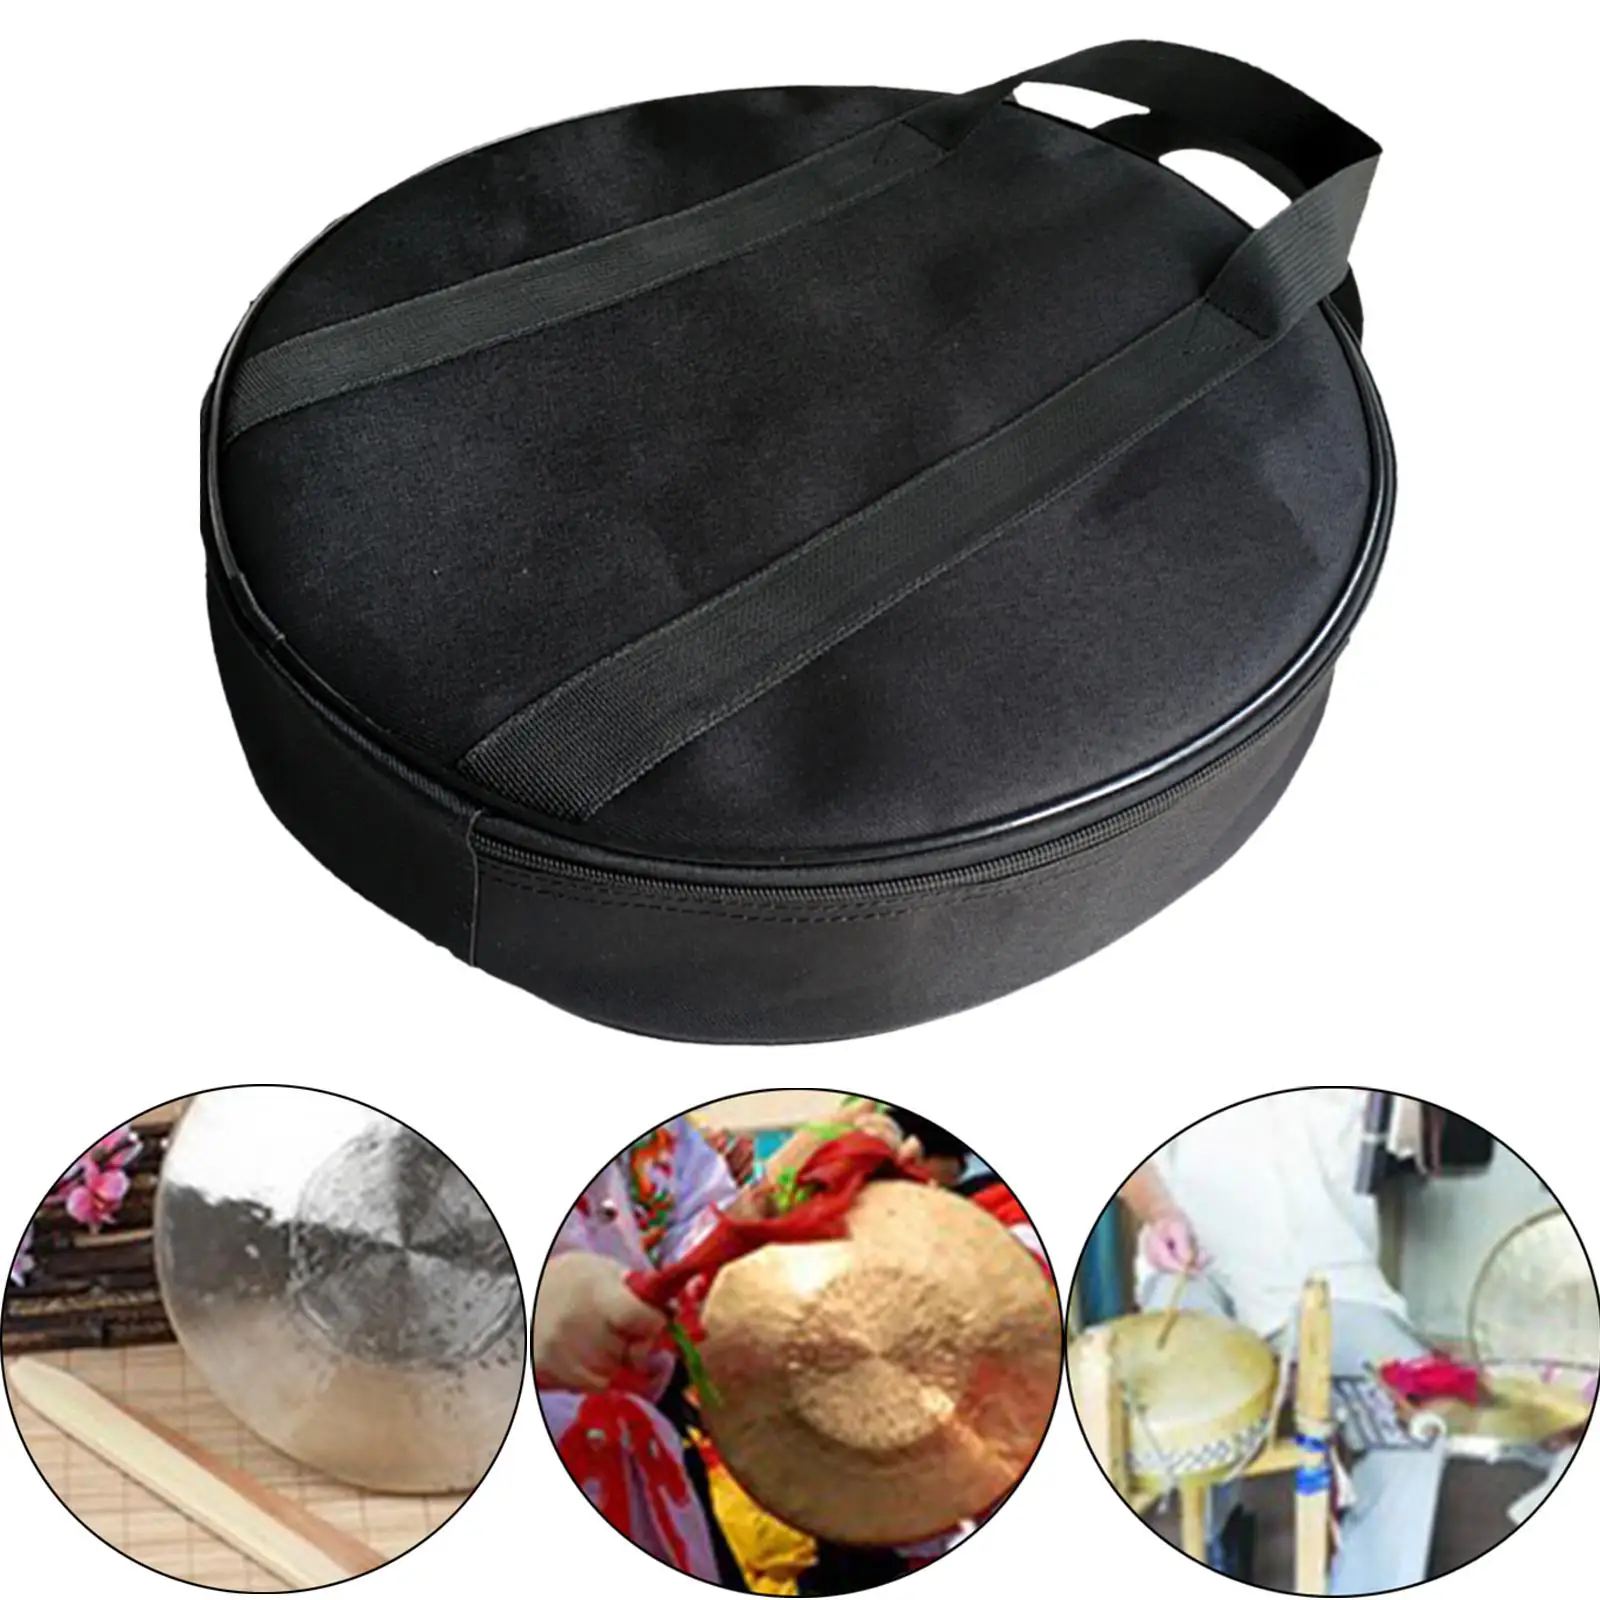 Deluxe Cymbal Bag Backpack Straps Wear Resistant Accessories Bag Black Durable Bag Backpack Waterproof Carry Case